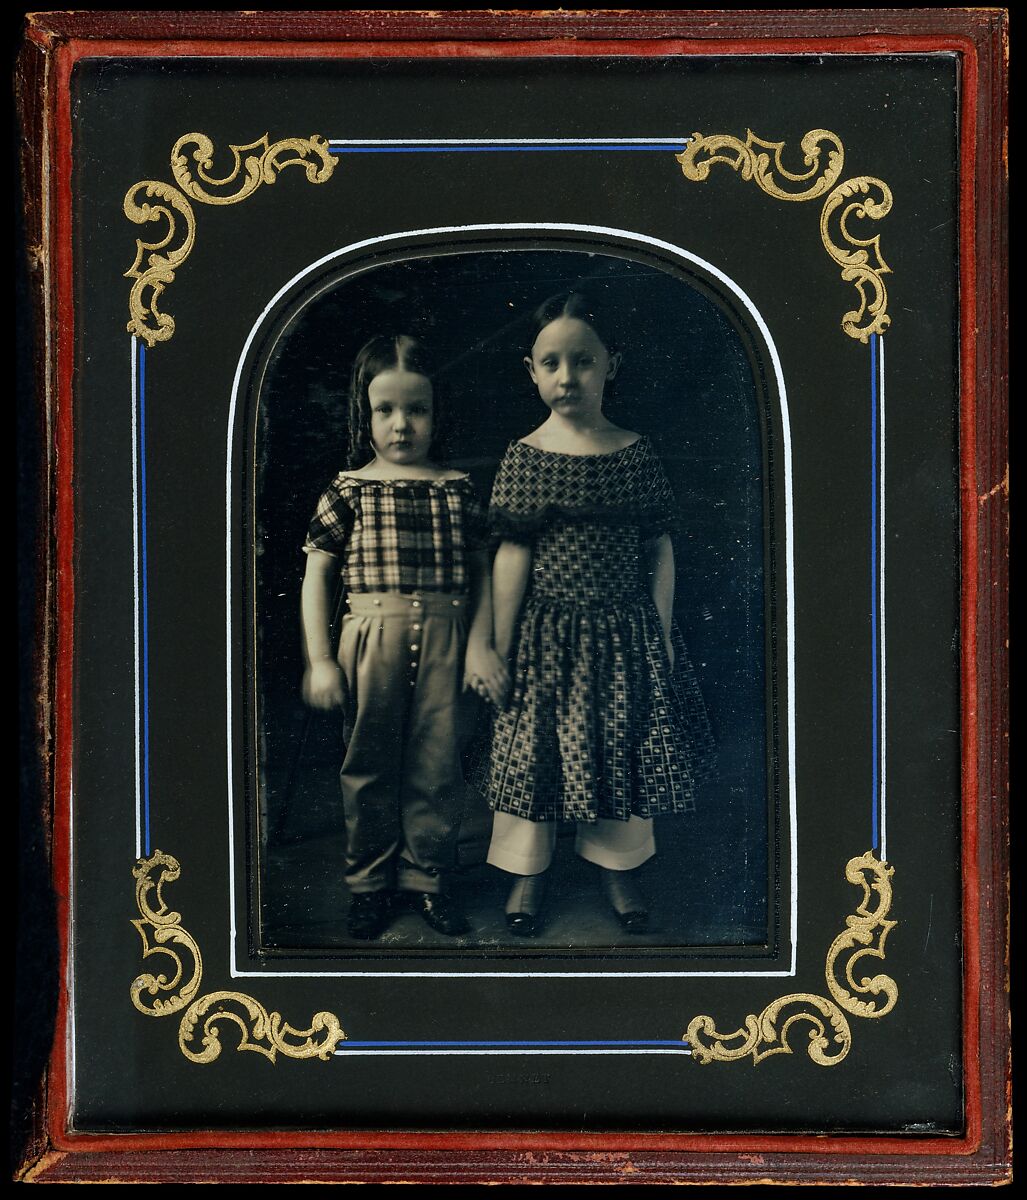 [Boy and Girl Holding Hands], Bennet (American, active 1840s), Daguerreotype 